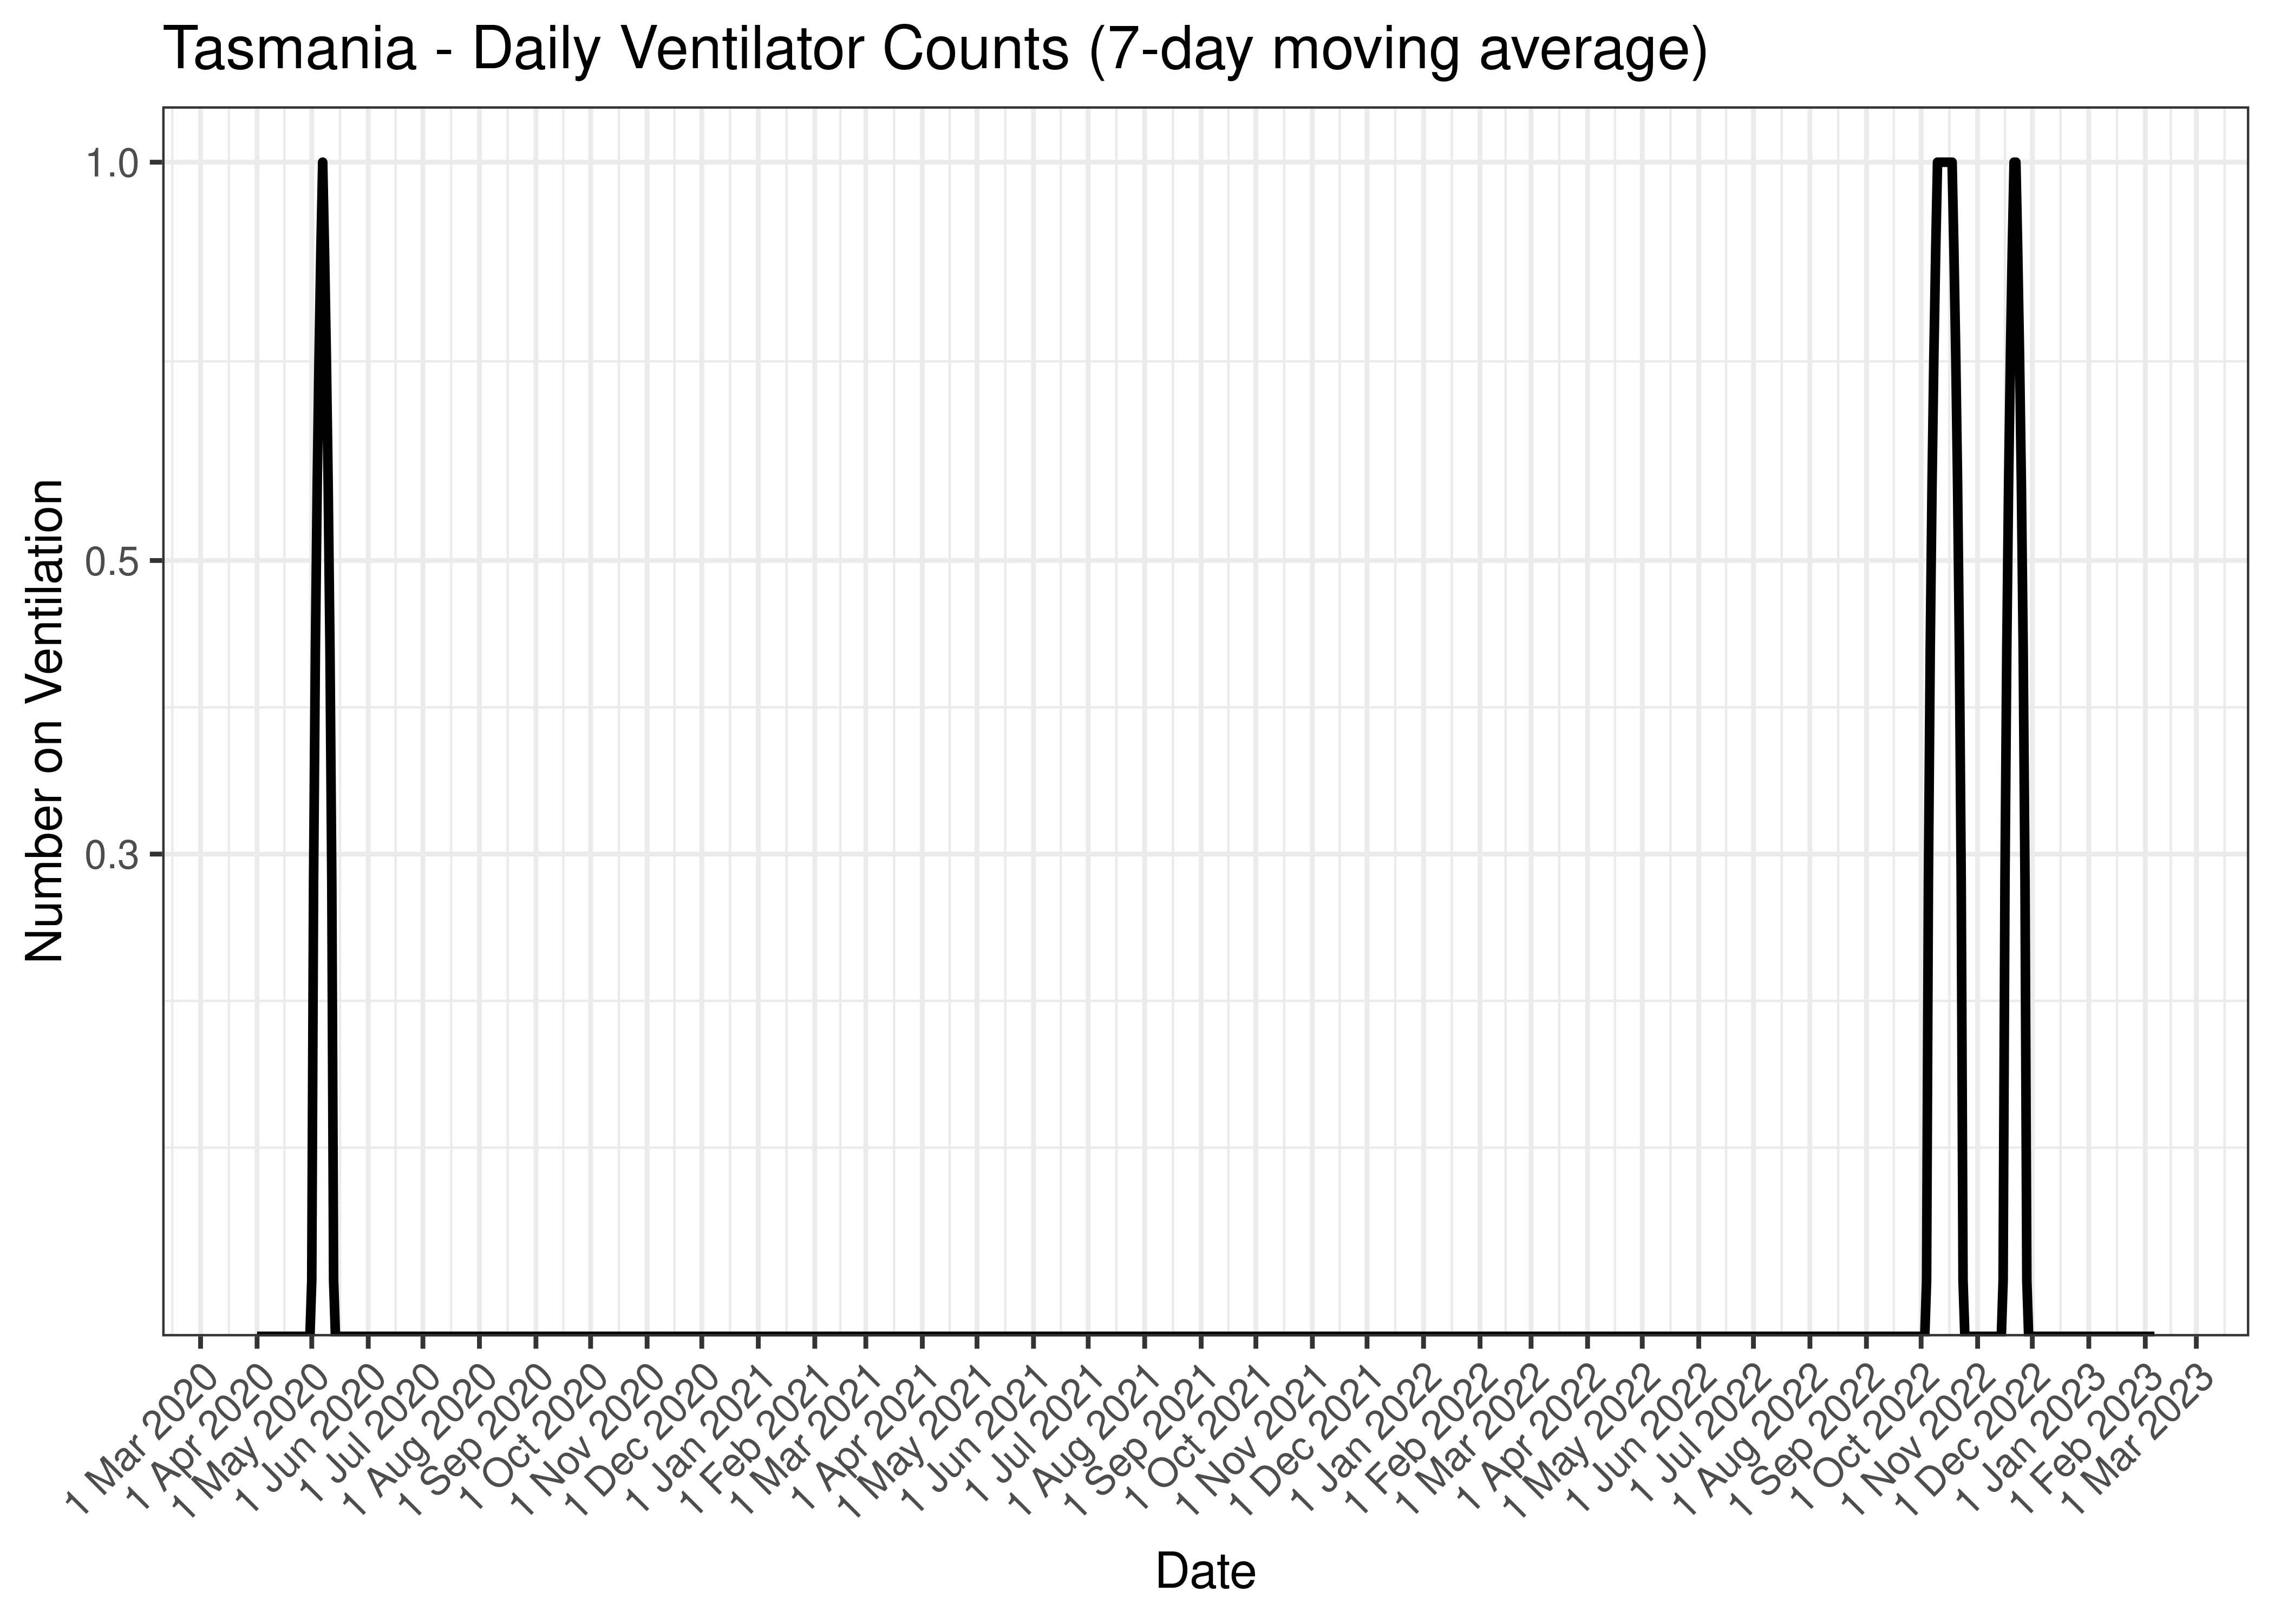 Tasmania - Percentage Testing Positive (7-day moving average)